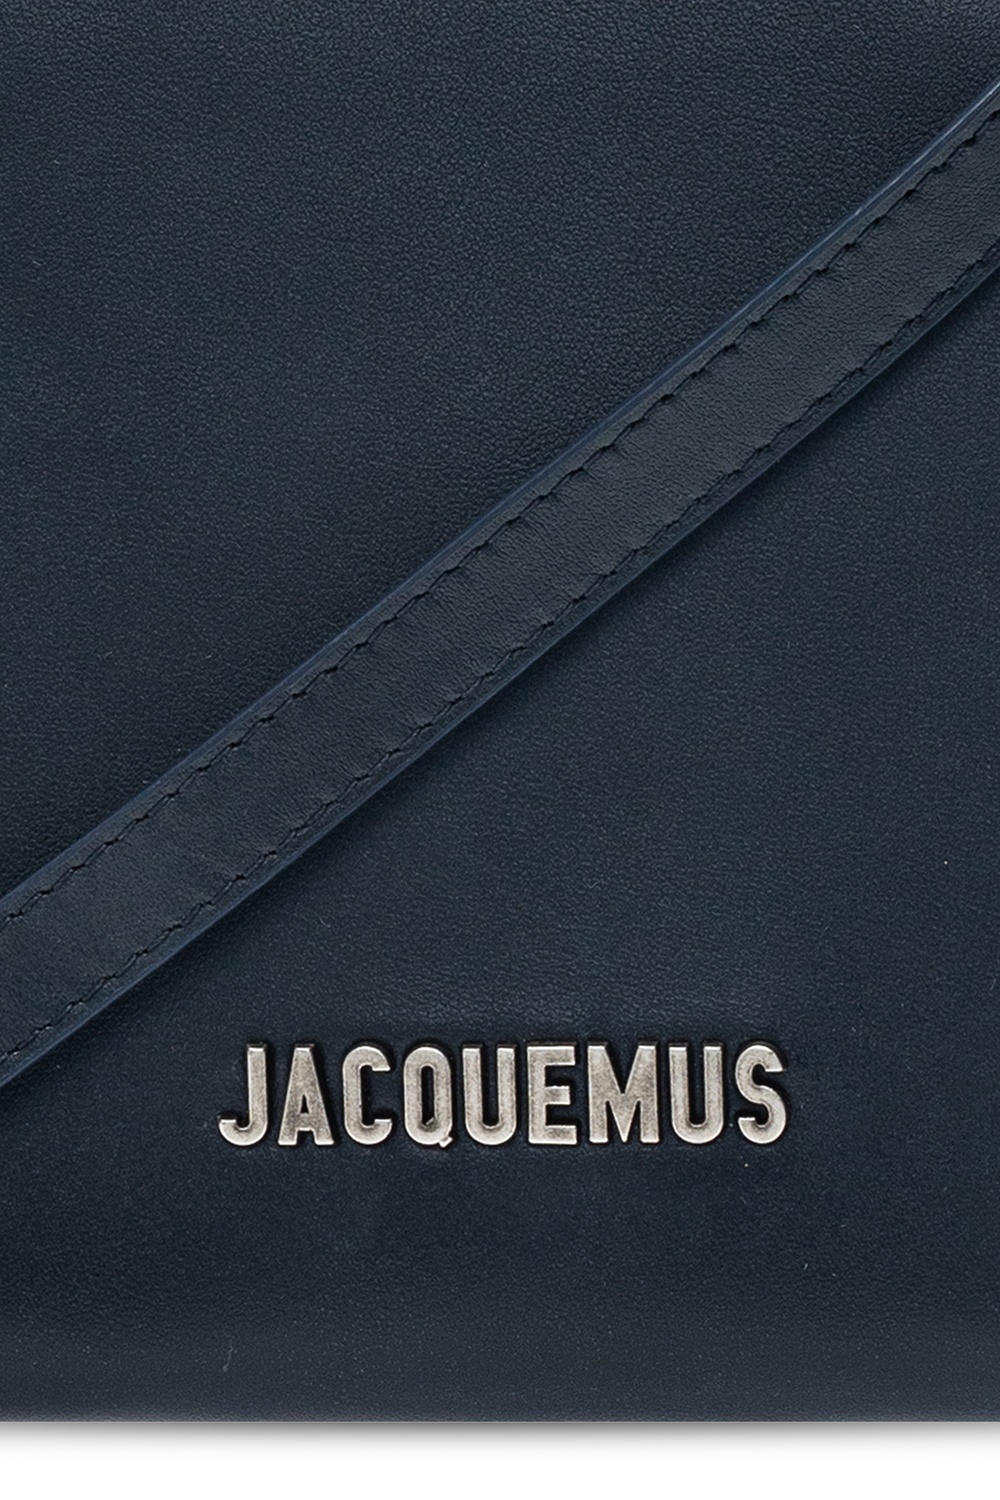 Jacquemus Canvas Wallet - Grey Wallets, Accessories - WJQ40440